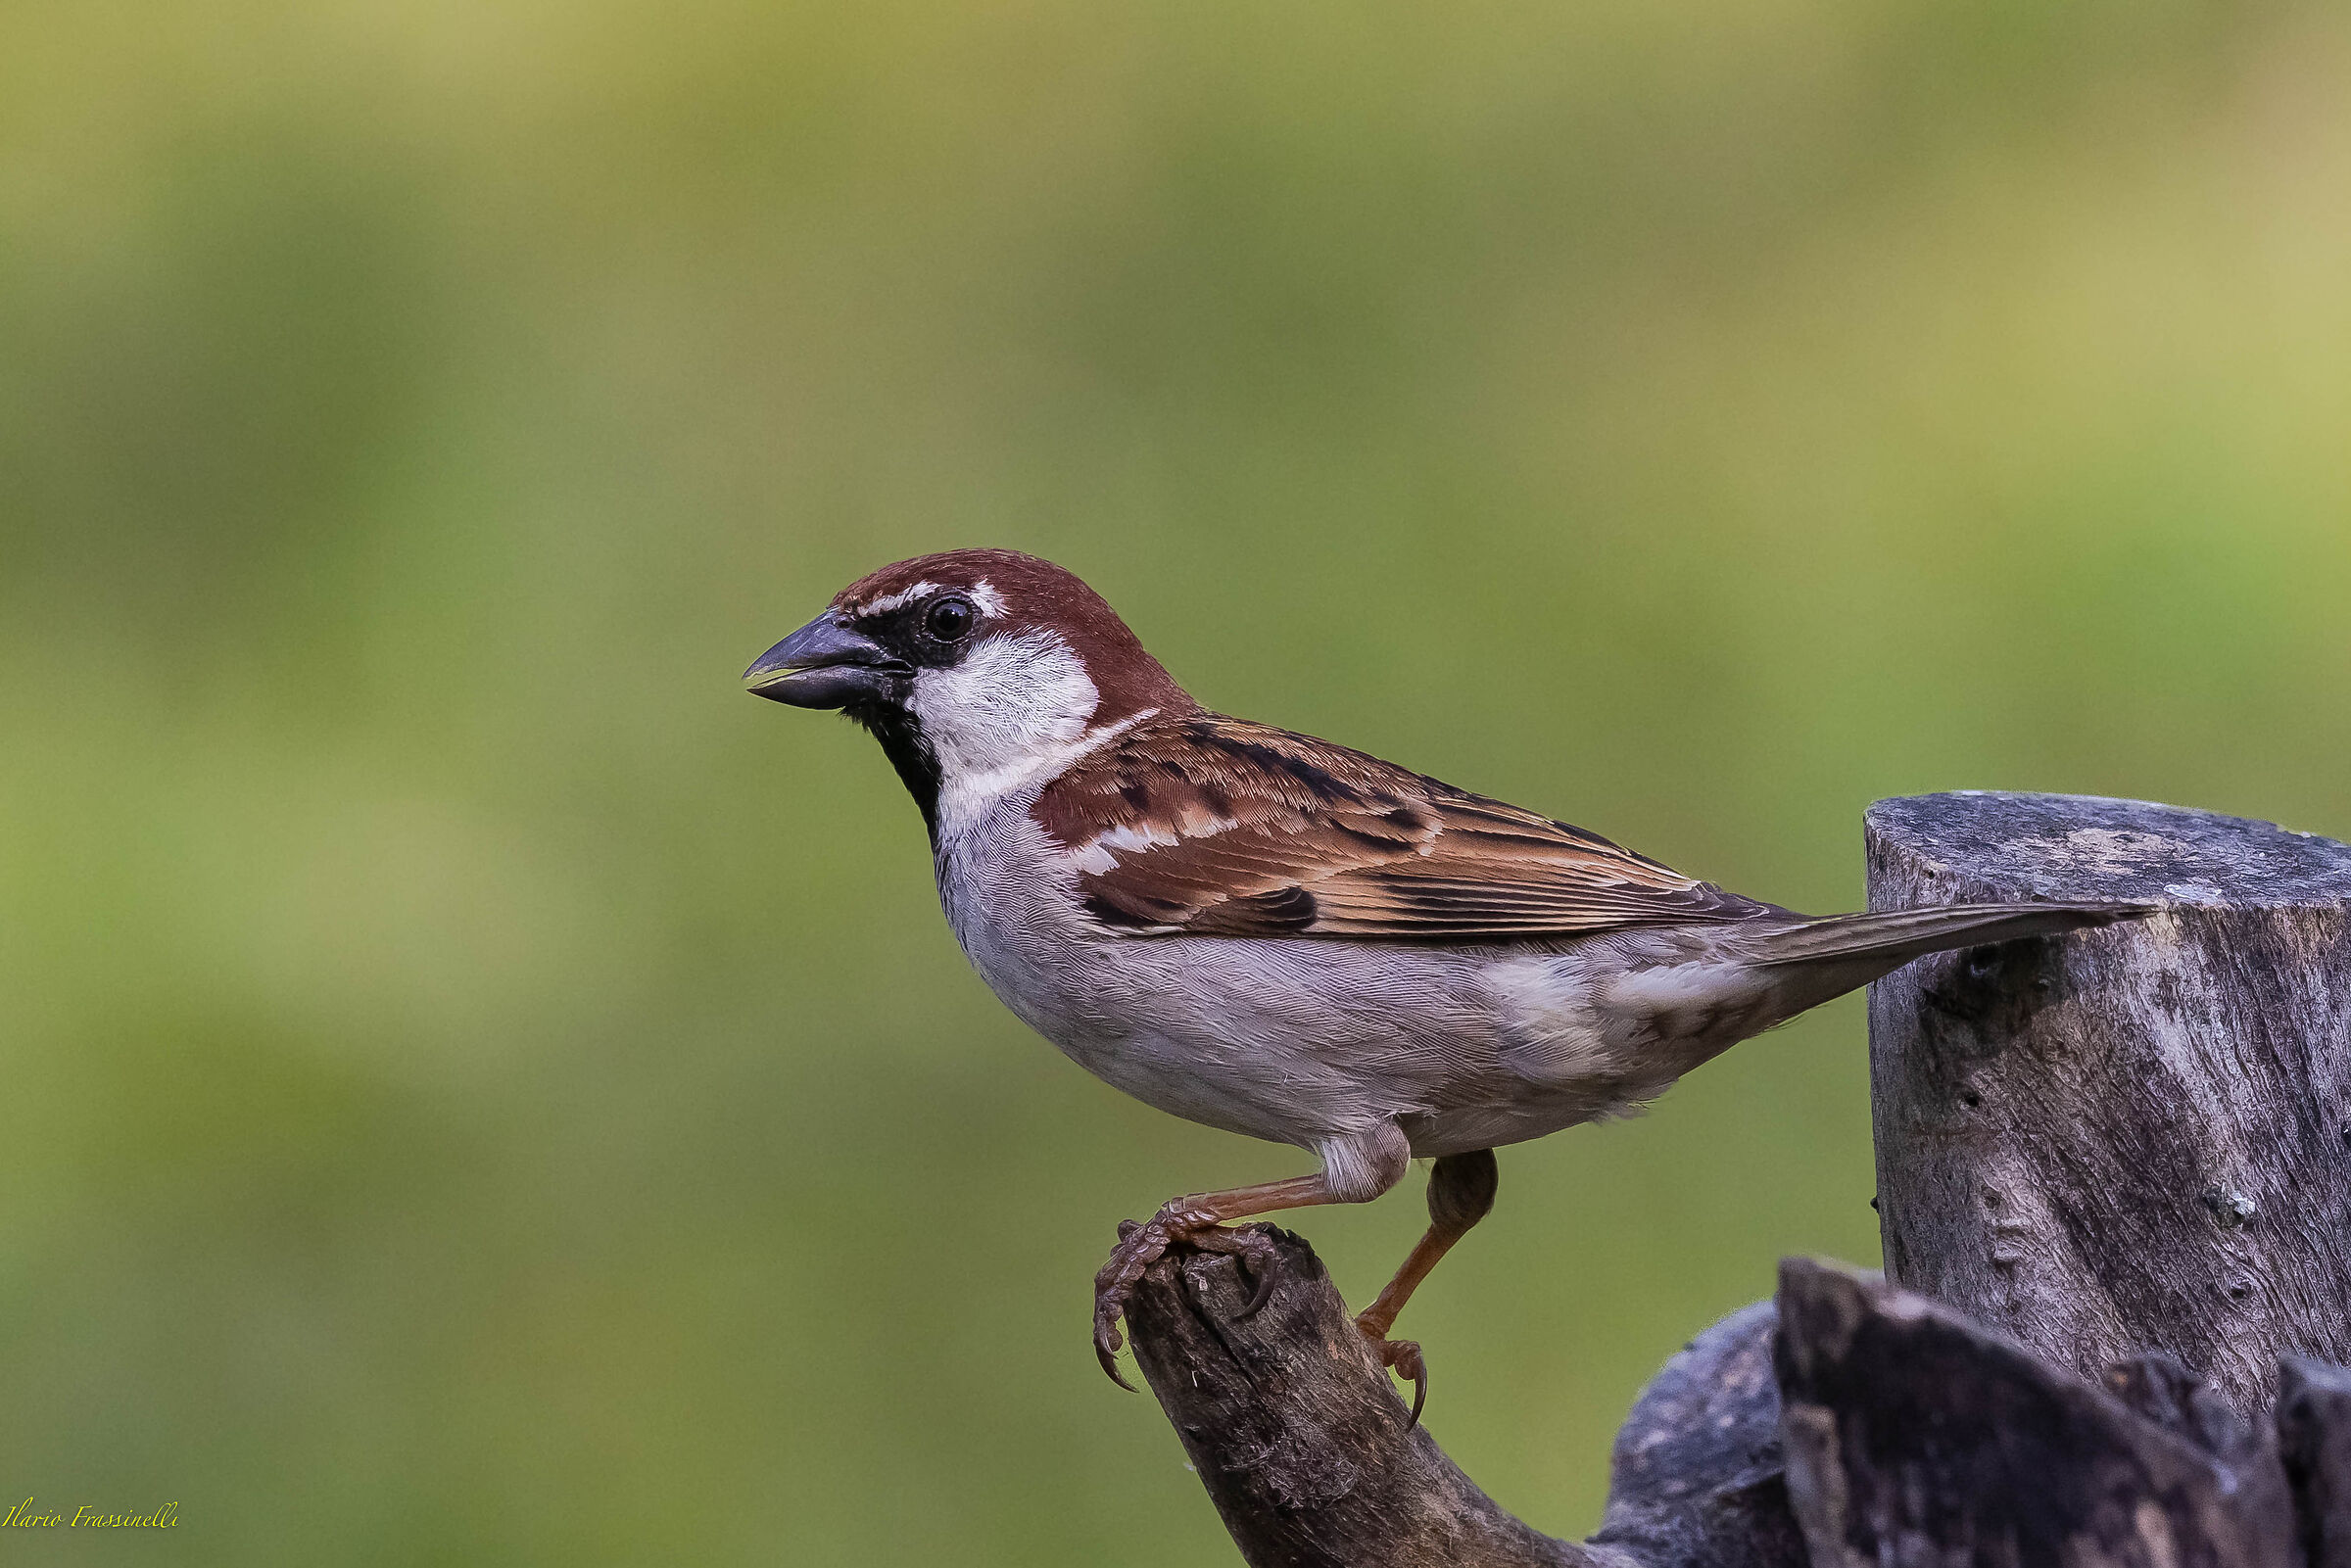 A beautiful sparrow...